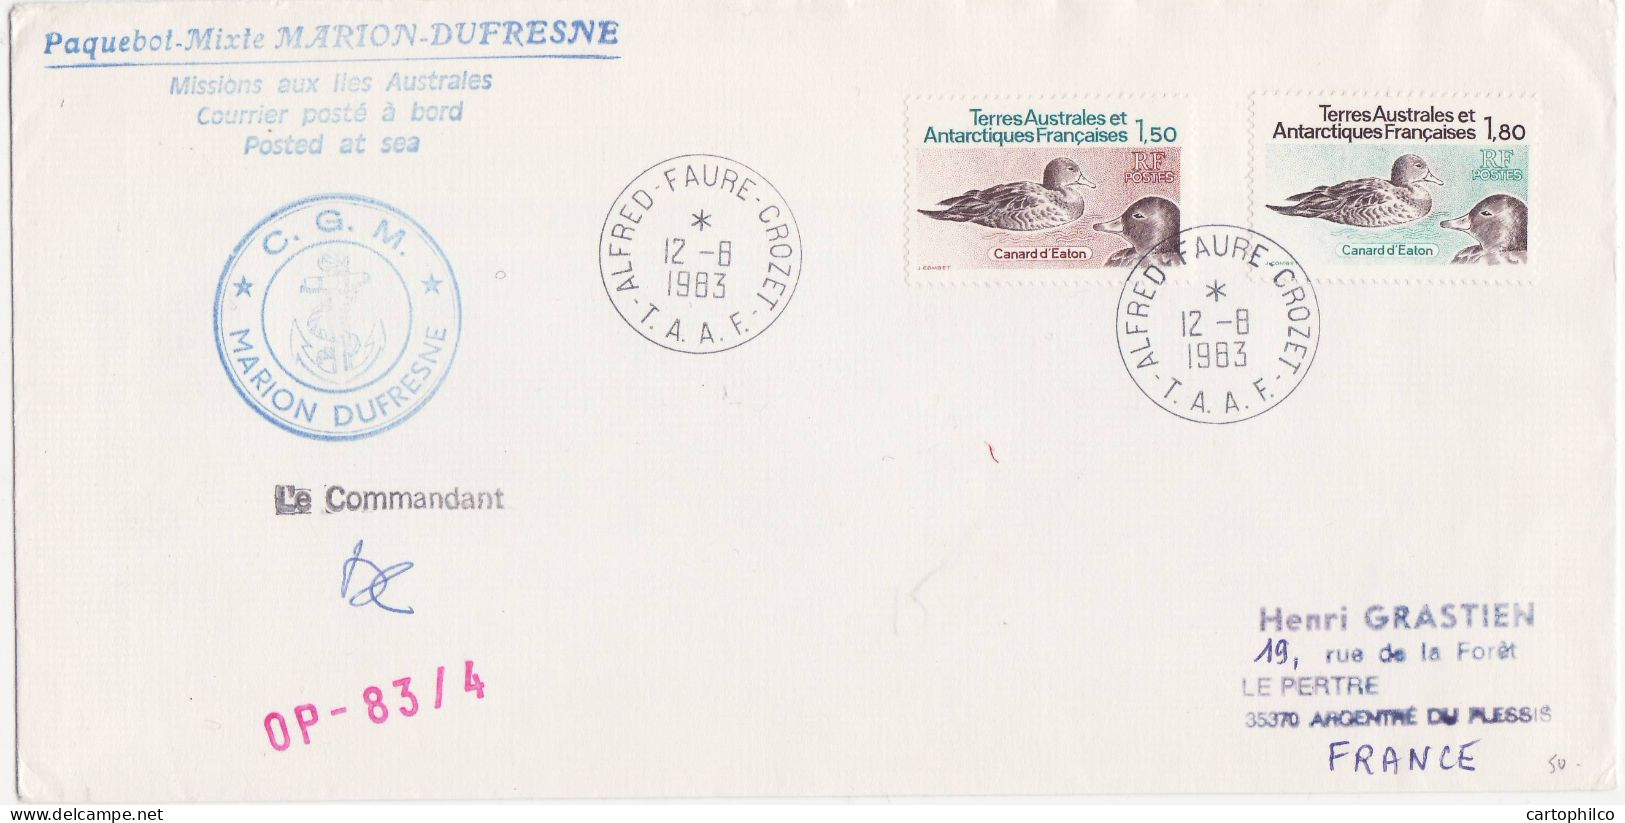 TAAF Lettre Marion Dufresne Alfred Faure Crozet 12 8 1983 Canard Pour Argentre Du Plessis - Covers & Documents